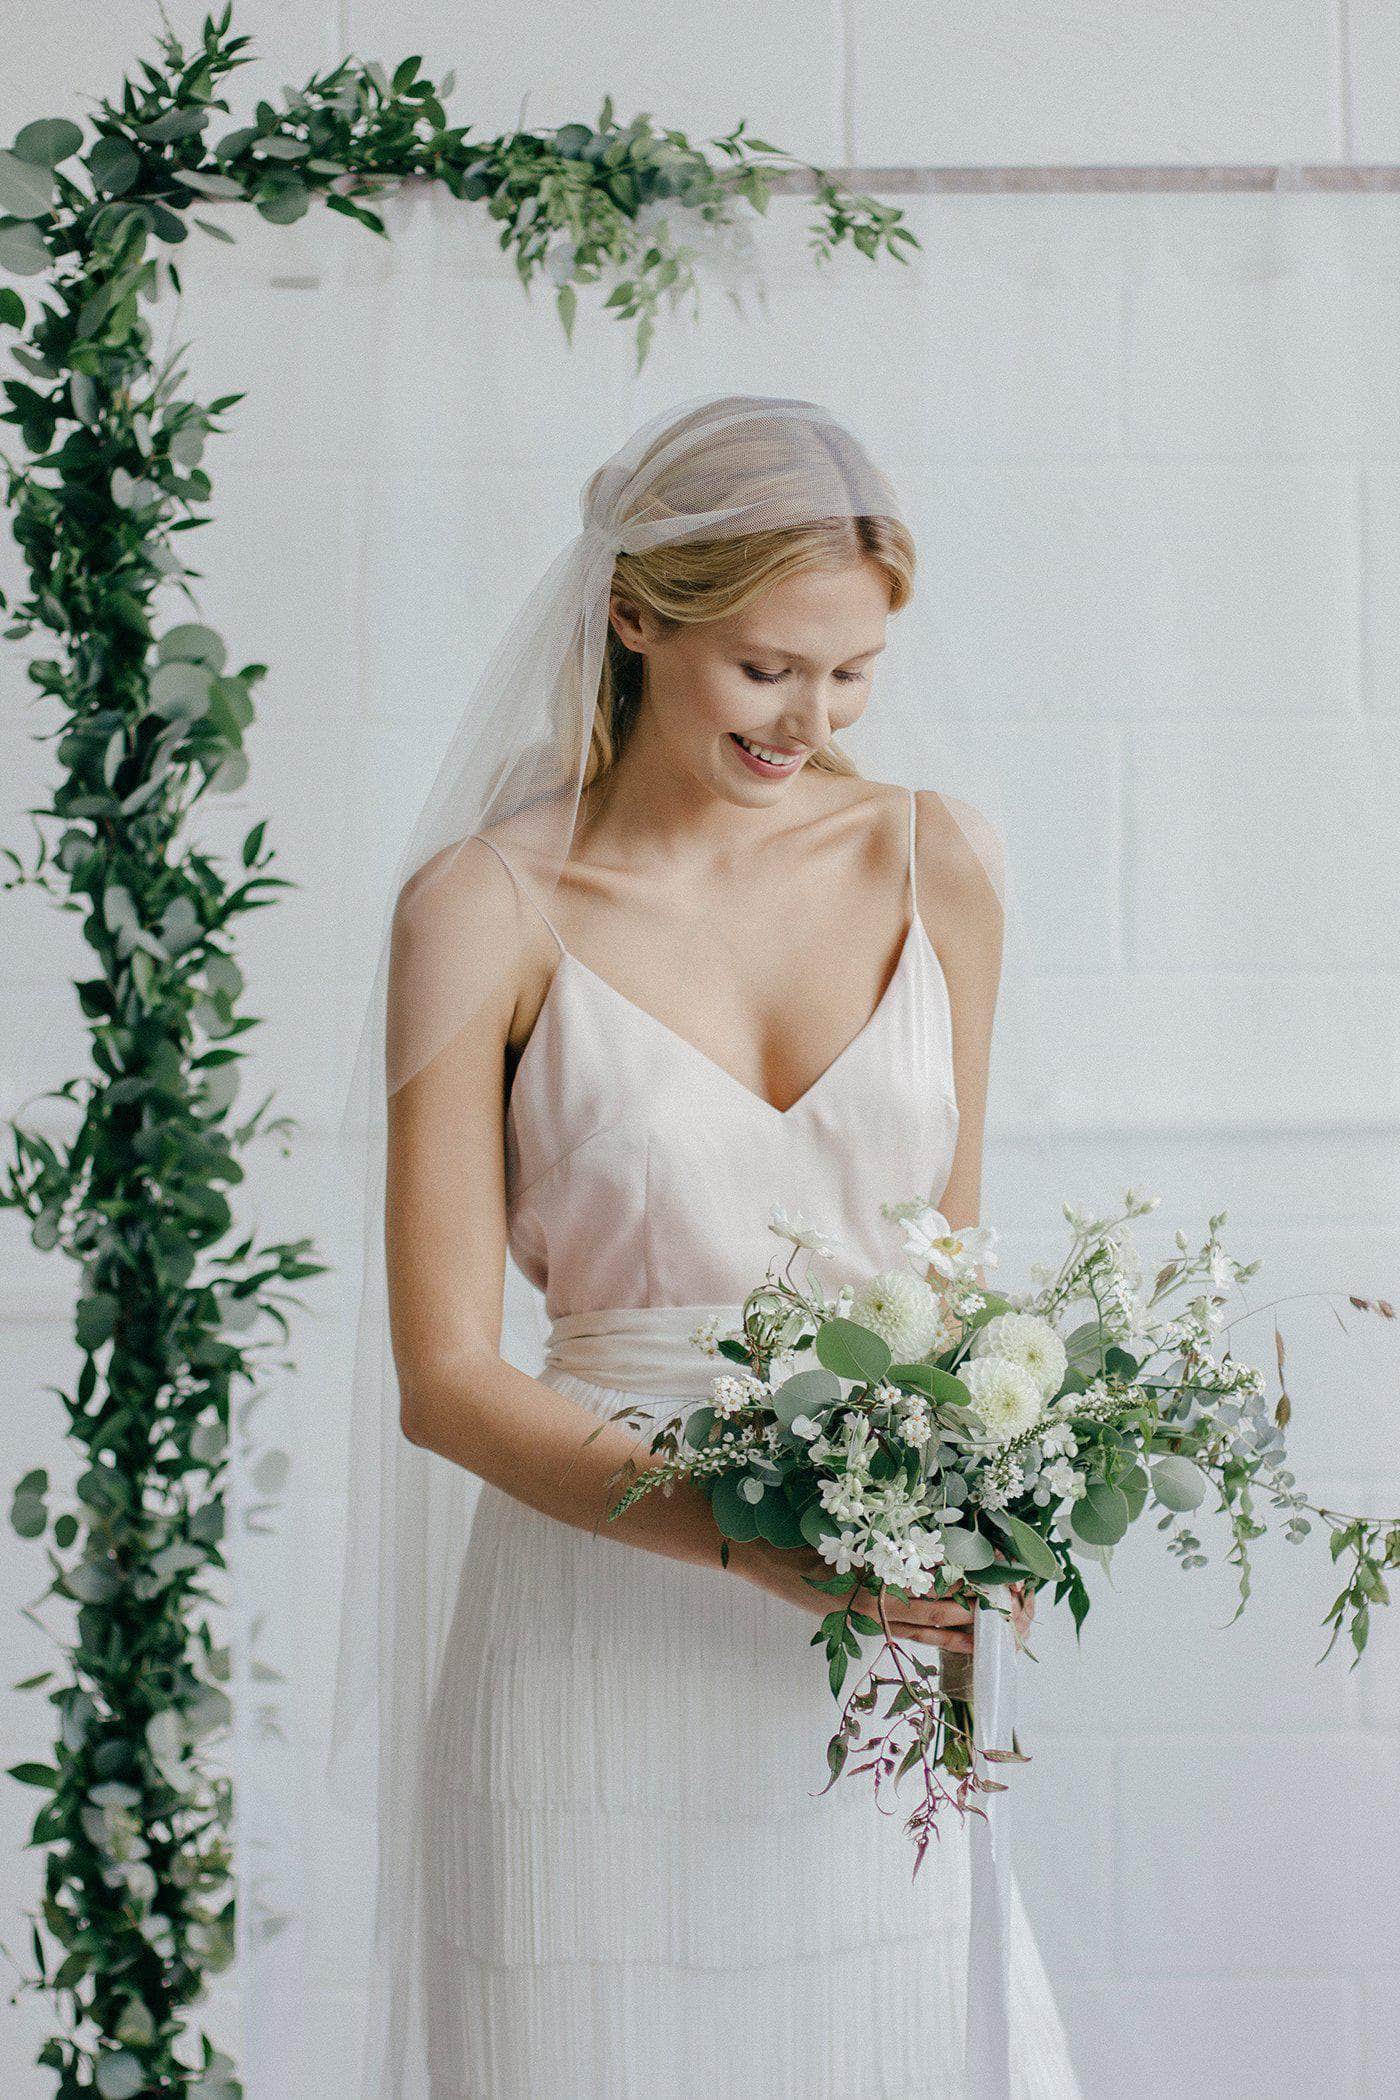 Wedding Veil white / Cathedral length White - Silk style juliet cap wedding veil - 'Dorothy'